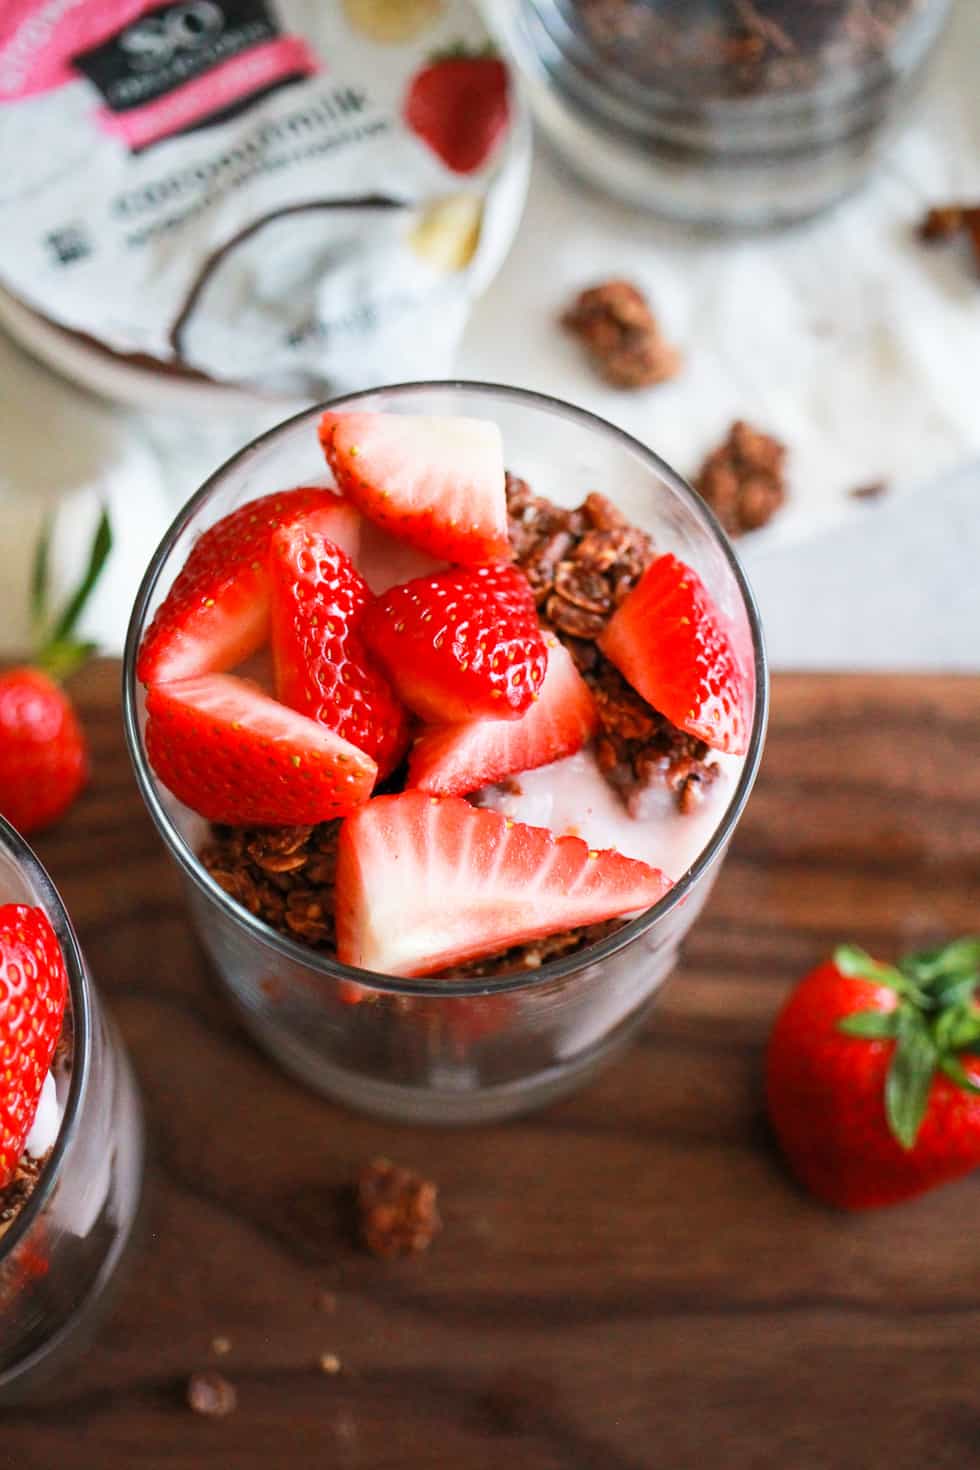 Strawberry yogurt parfait in glass on wood board with carton of So Delicious yogurt.